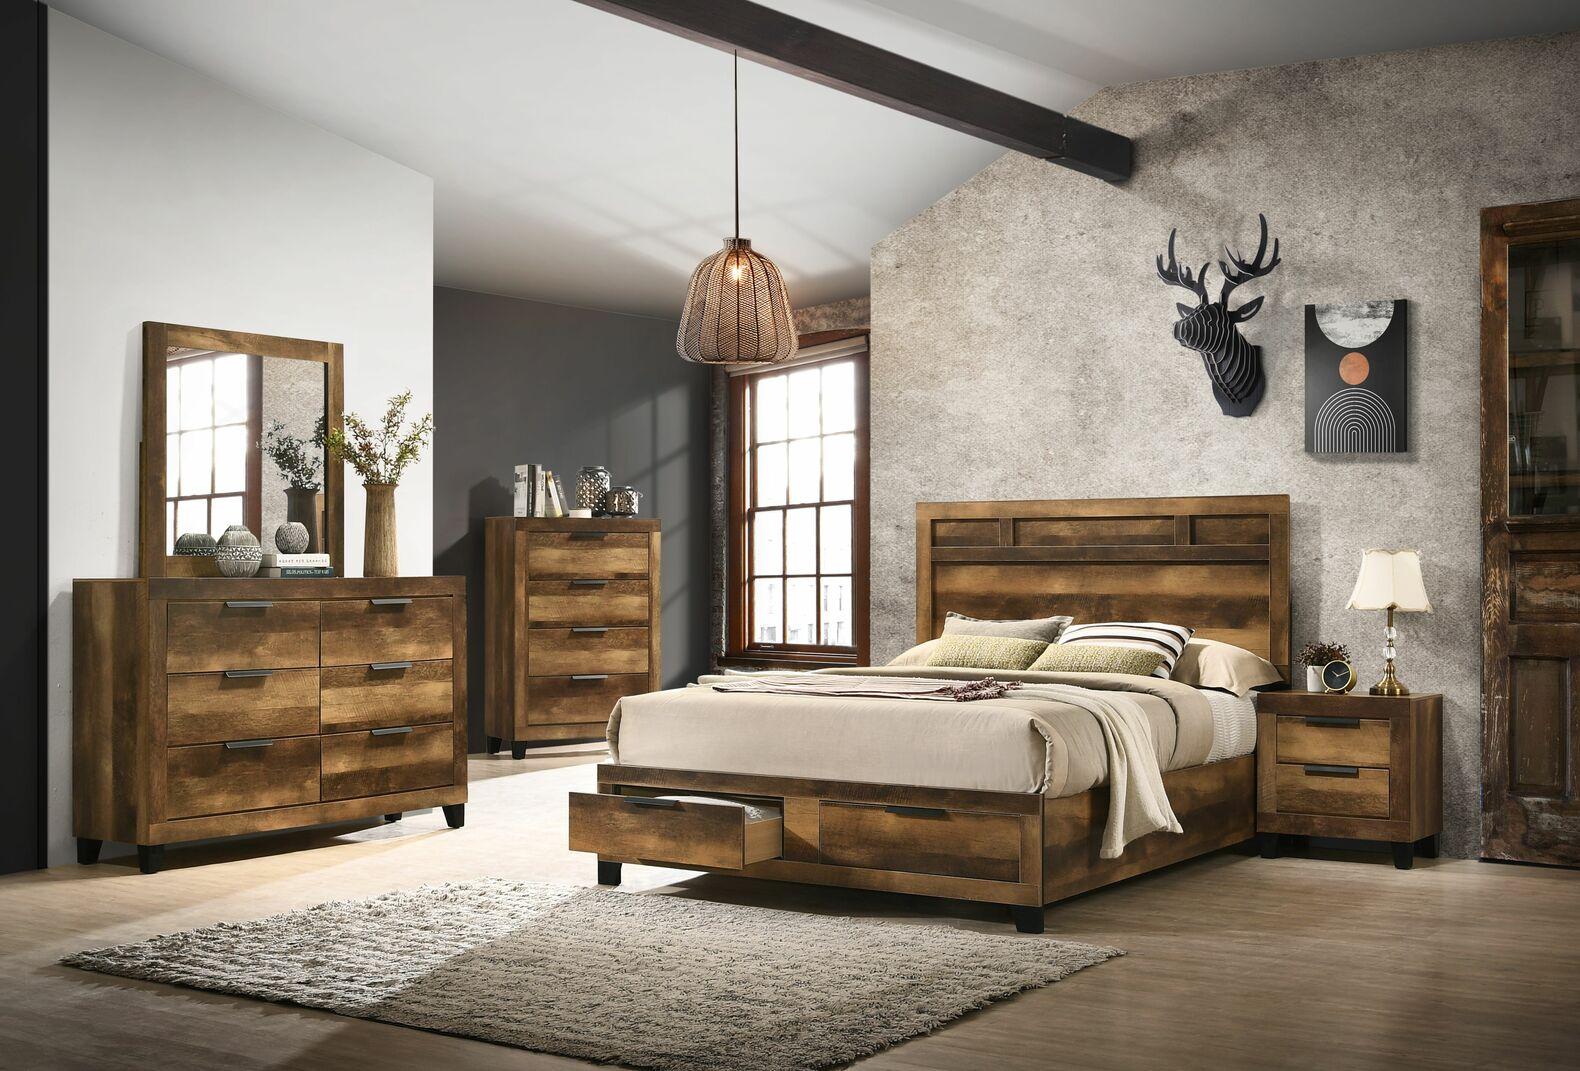 Rustic Bedroom Set Morales 28590Q-5pcs in Rustic Brown 